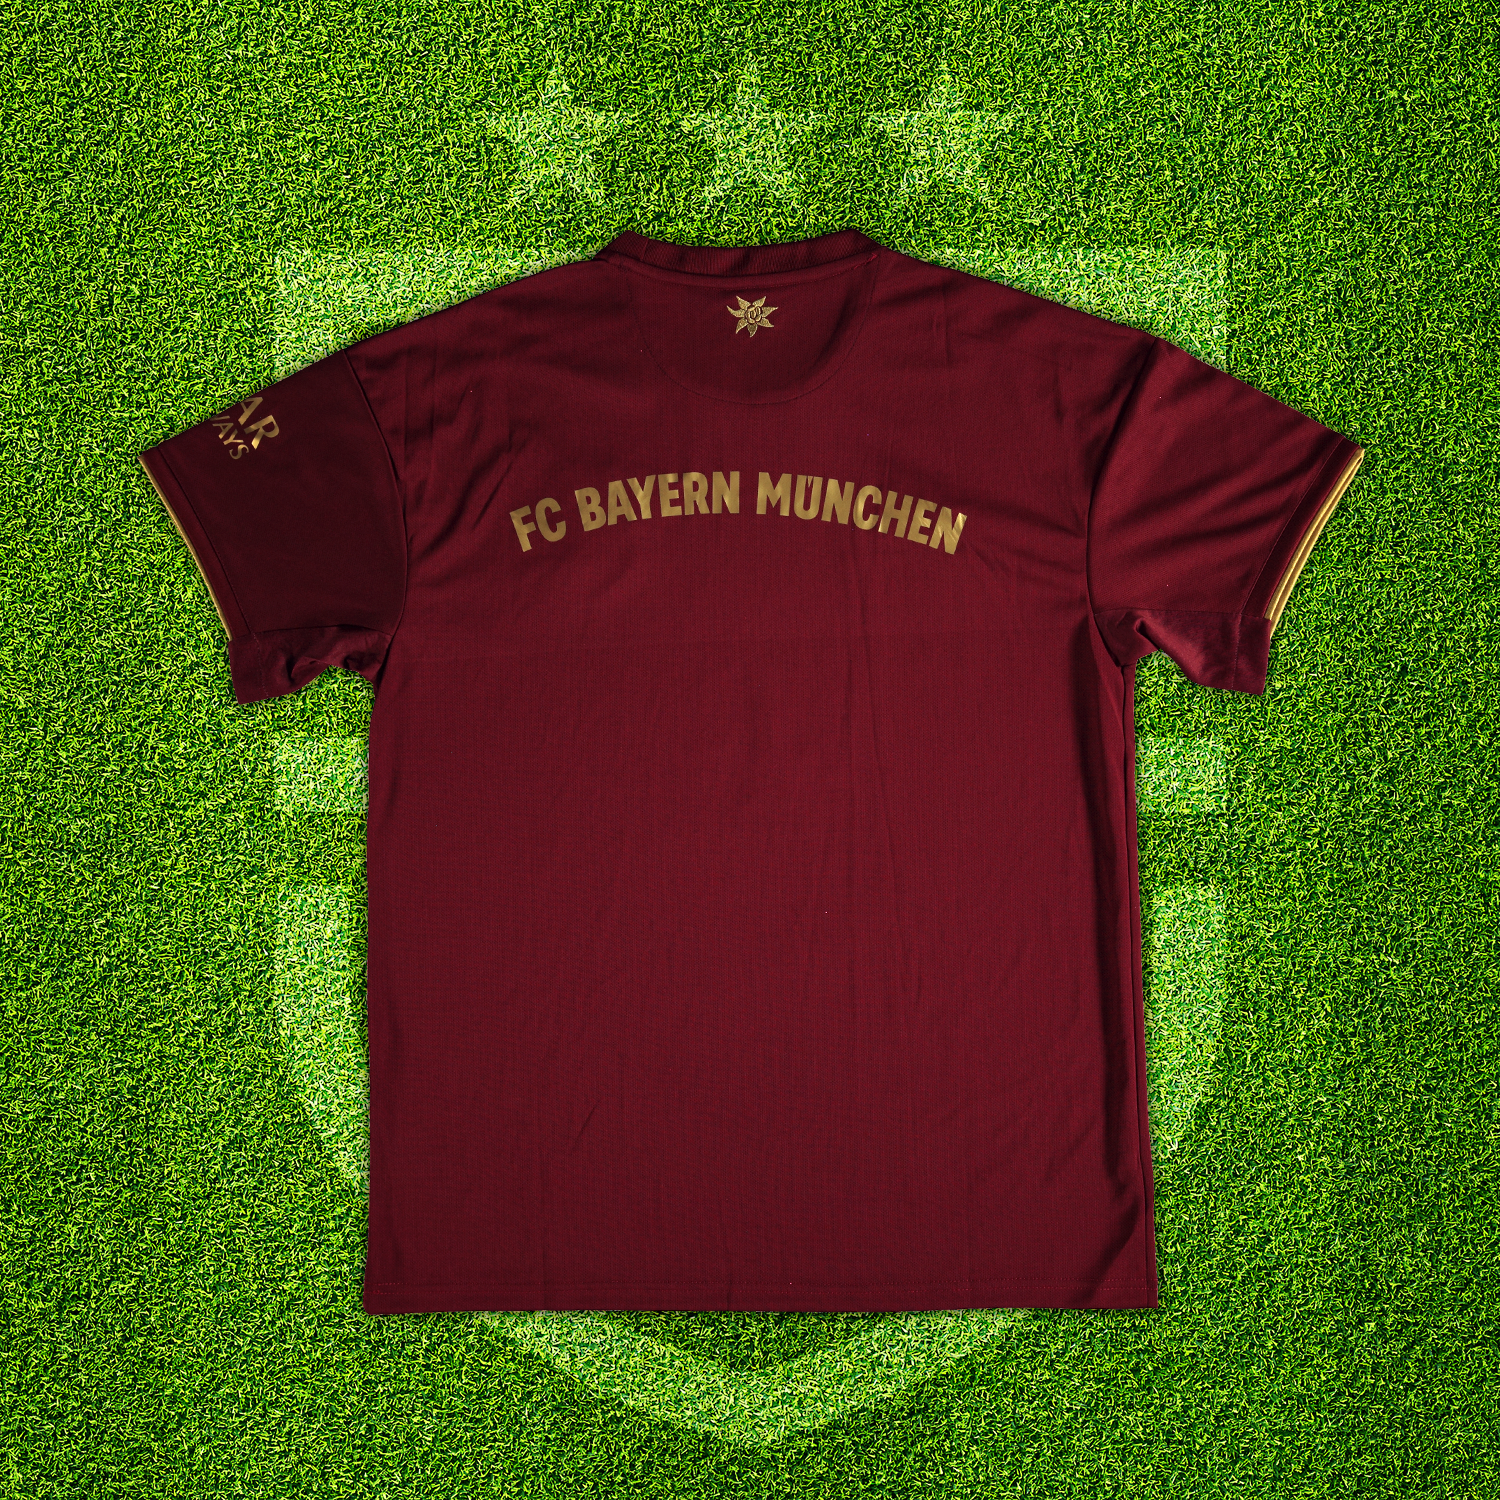 2022-23 FC Bayern München shirt - Limited Edition Oktoberfest (XL)